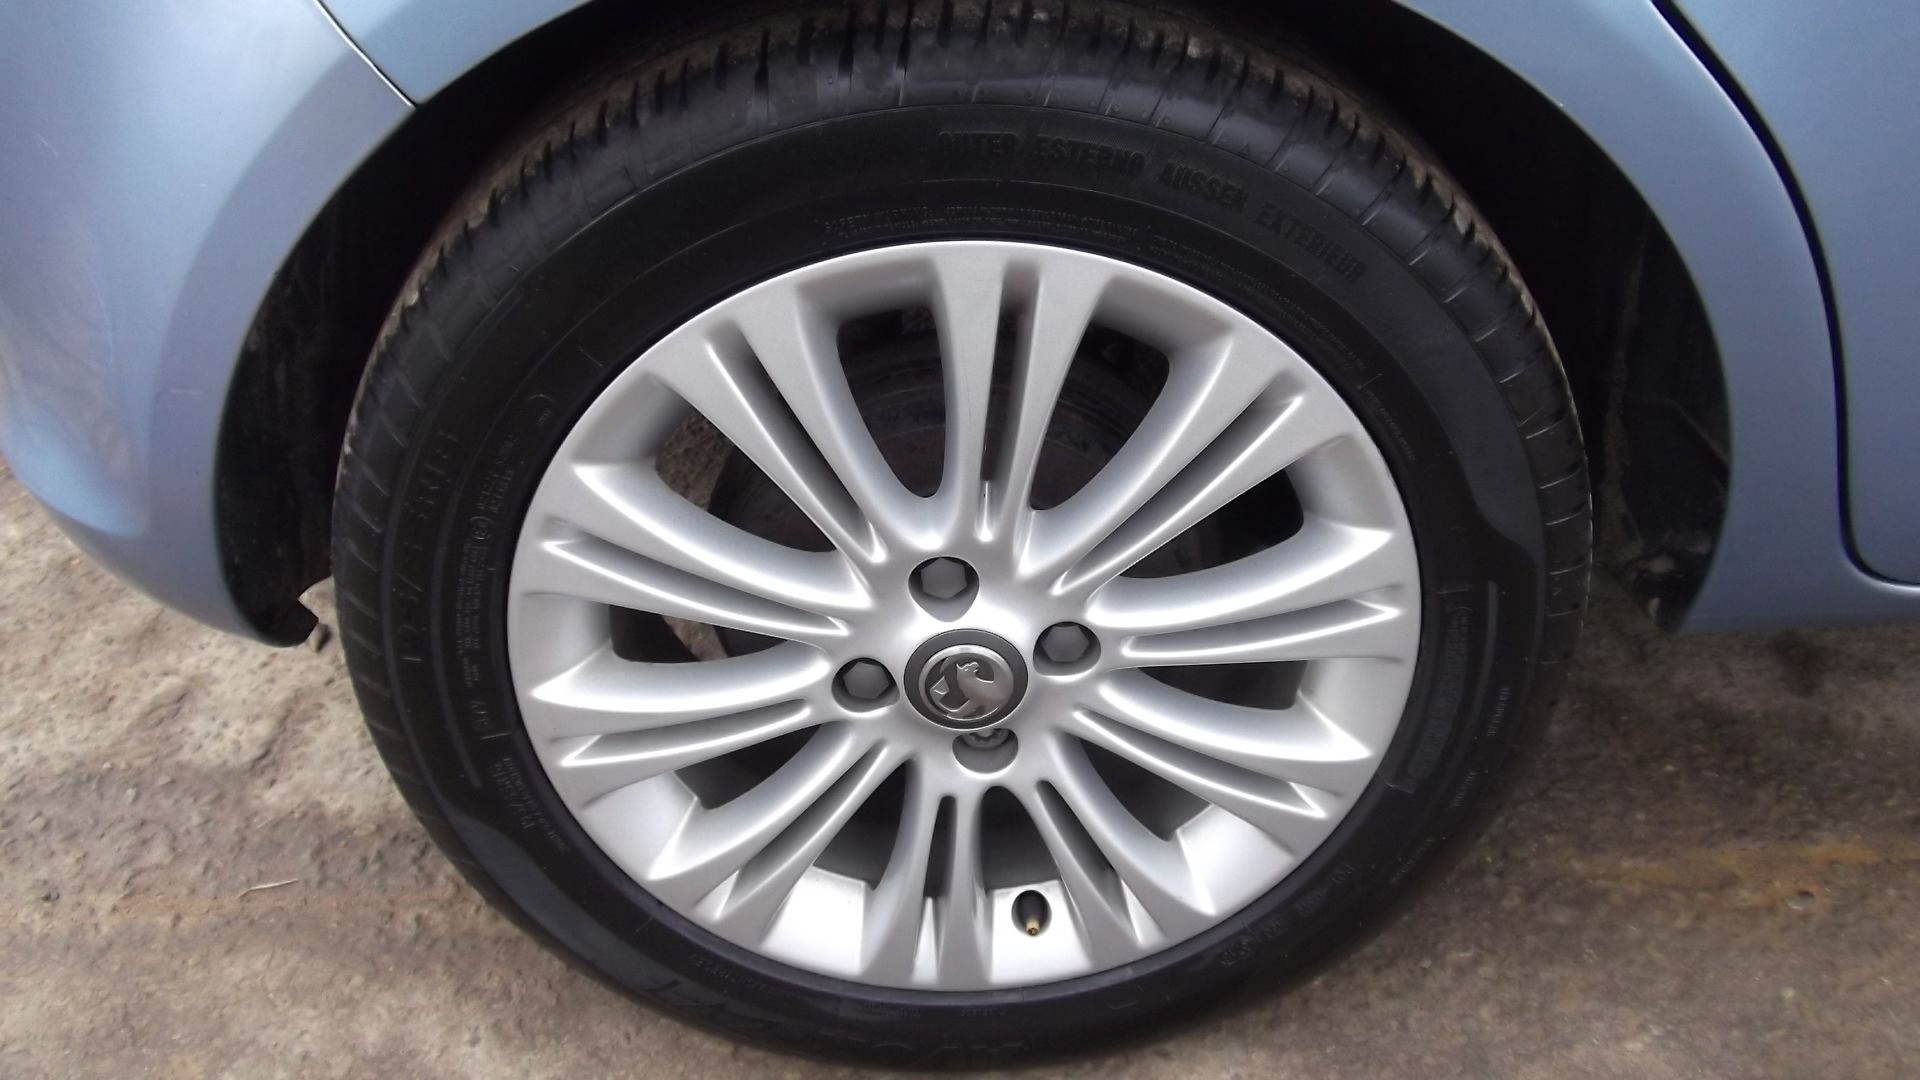 2014 Vauxhall Corsa Se 5Dr Hatchback - Full Service History - CL505 - NO VAT ON THE HAMMER - - Image 22 of 24